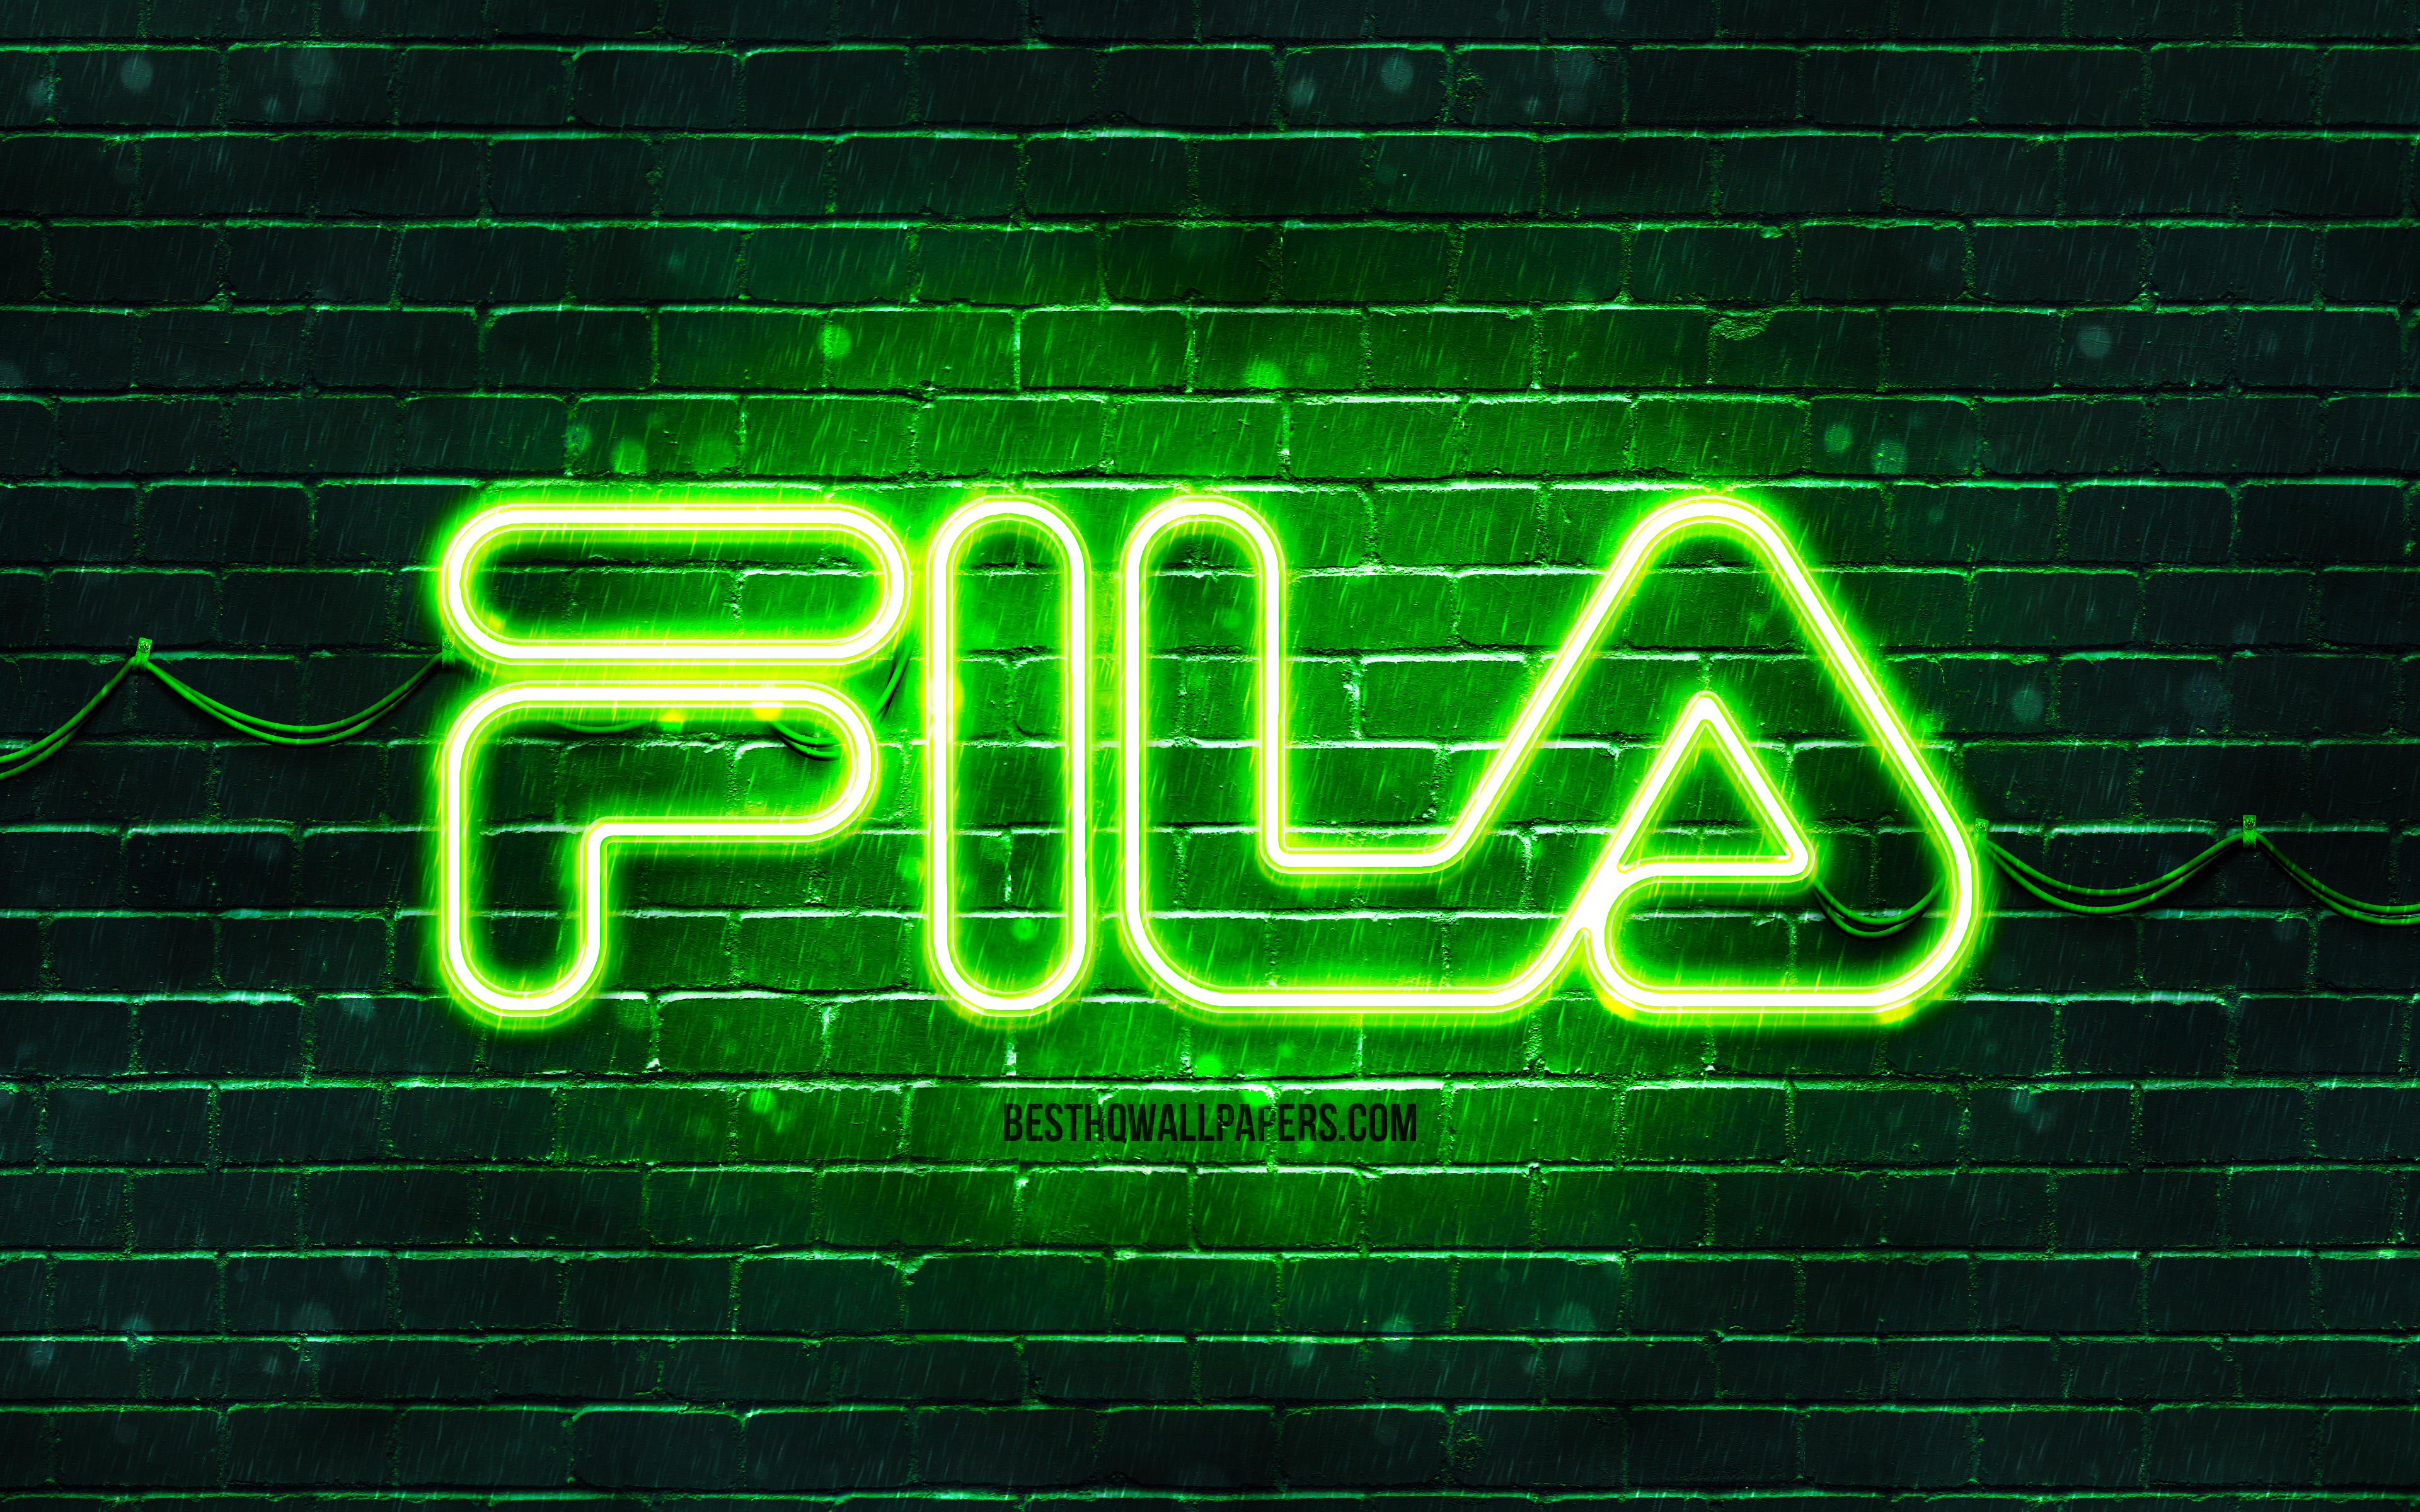 Download wallpaper Fila green logo, 4k, green brickwall, Fila logo, brands, Fila neon logo, Fila for desktop with resolution 3840x2400. High Quality HD picture wallpaper